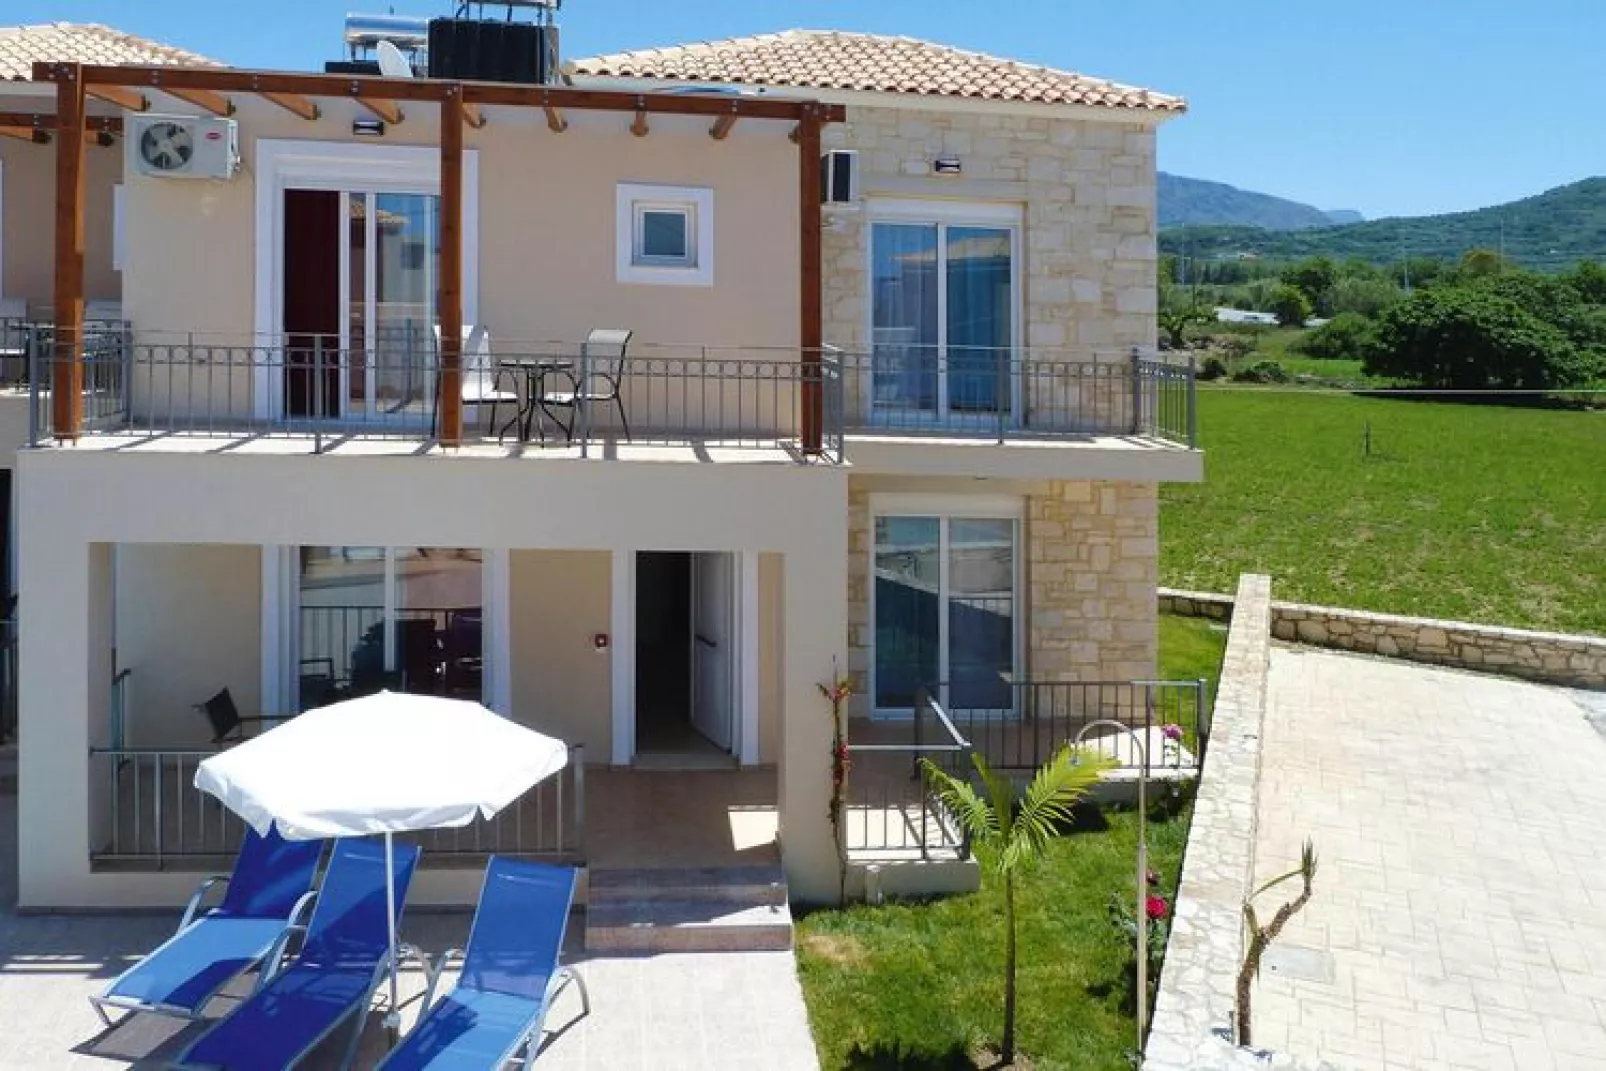 Villas Azure Beach Nopigia 3-bedroom-villa - 100 sqm with private pool